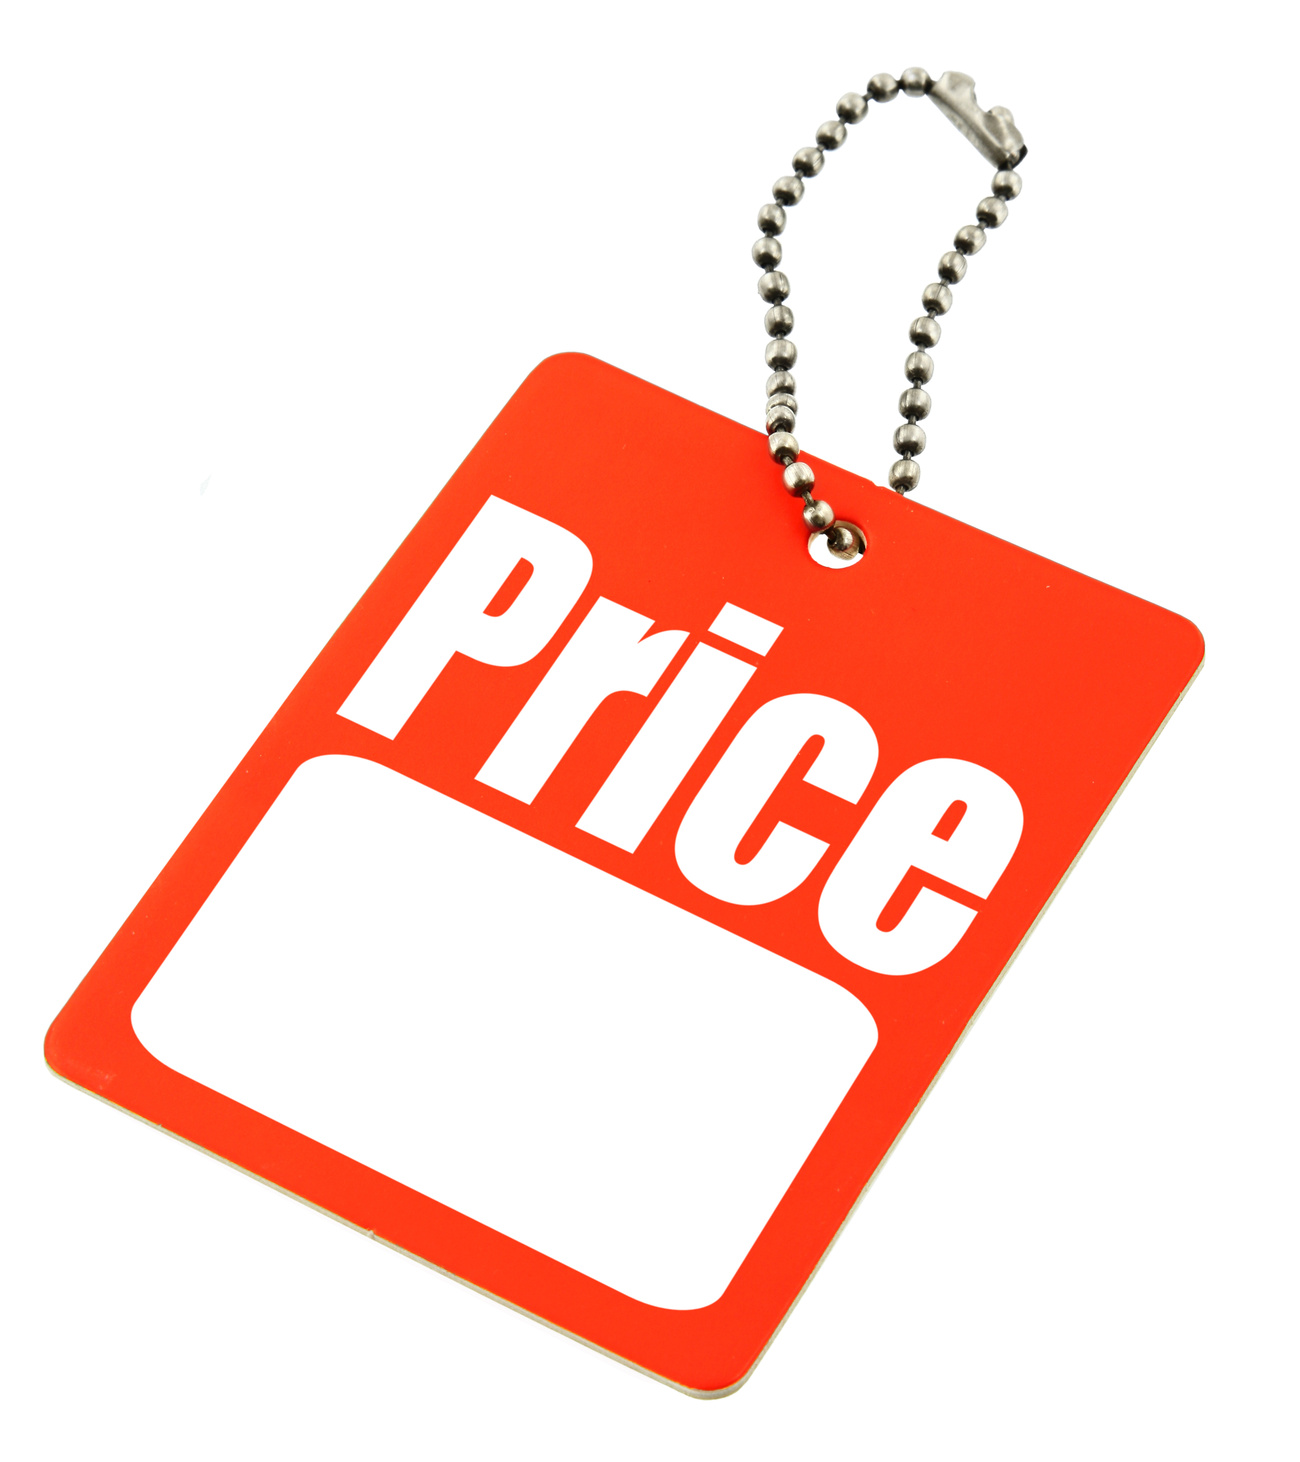 Price Tag clip art - vector c